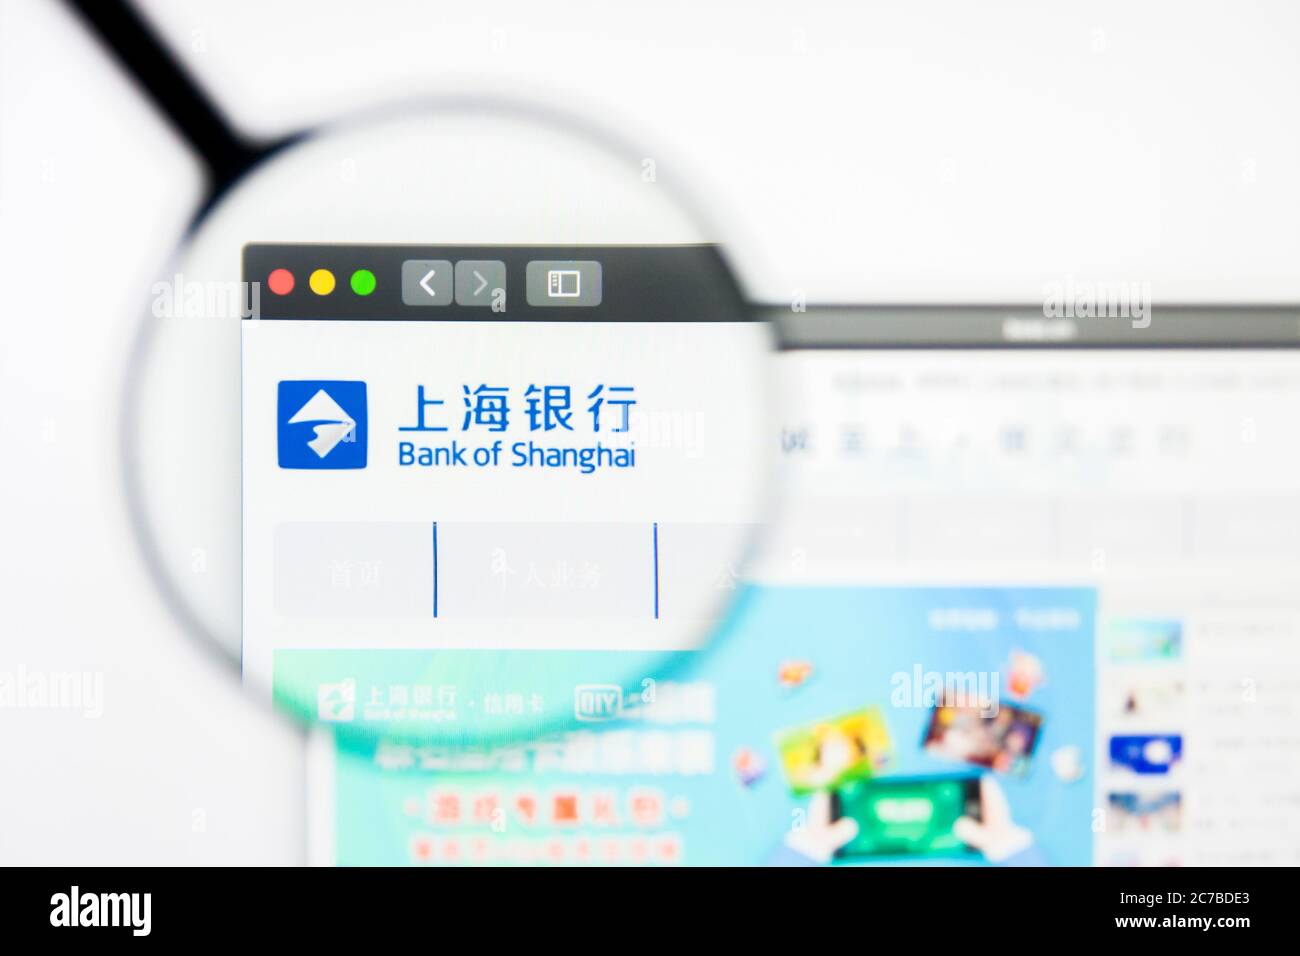 Los Angeles, Kalifornien, USA - 5. April 2019: Illustrative Editorial der Homepage der Bank of Shanghai. Bank of Shanghai Logo sichtbar auf dem Display Stockfoto